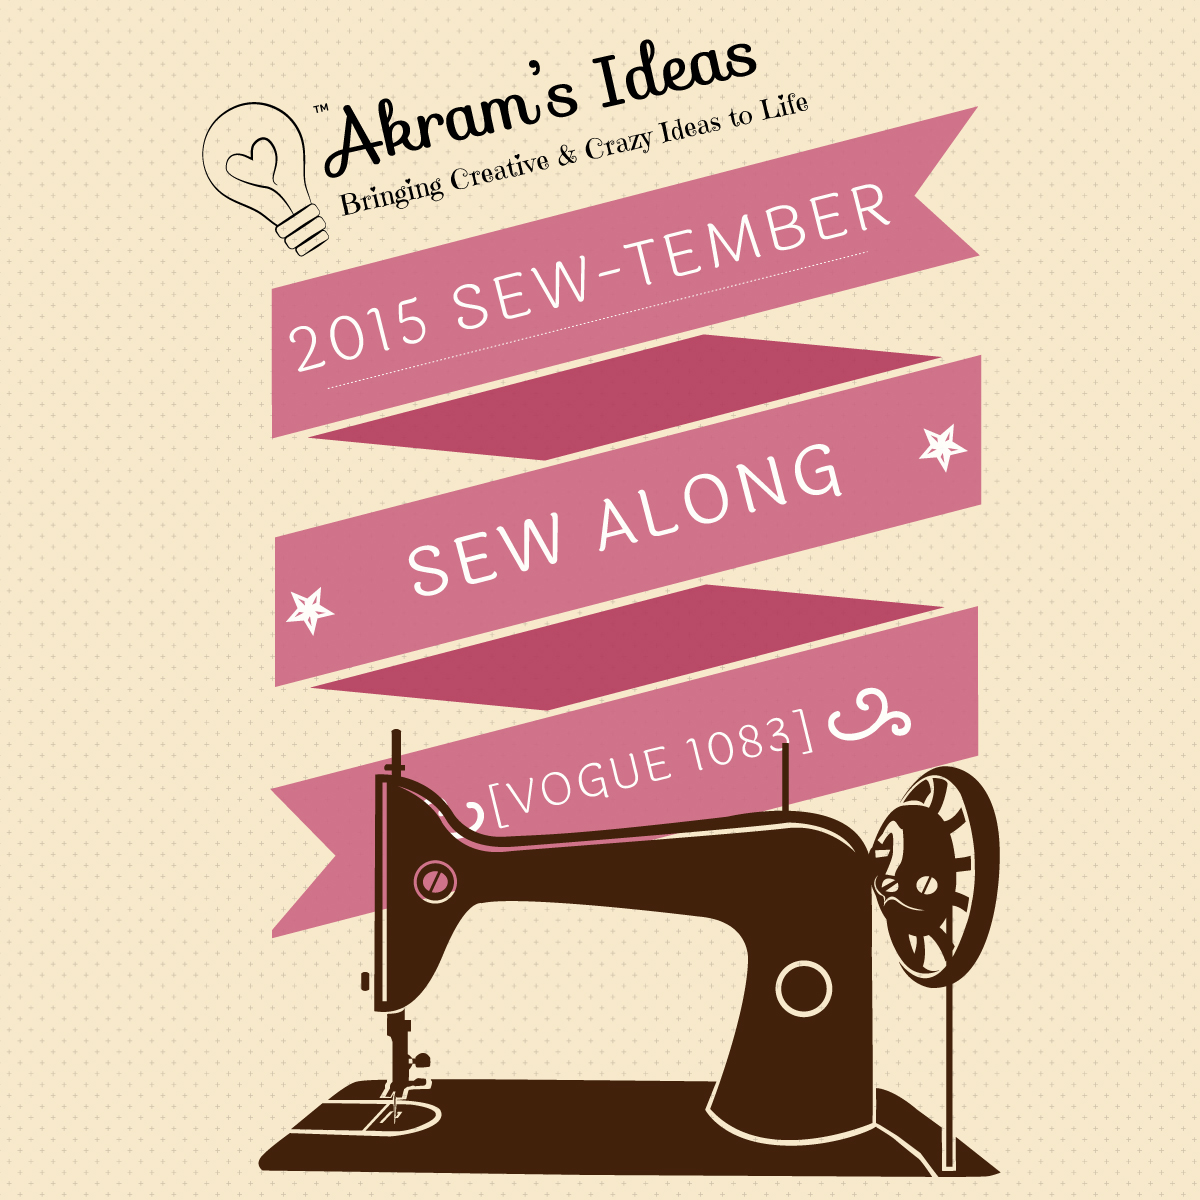 Akram's Ideas : 2015 Sew-tember Sew Along - Vogue 1083